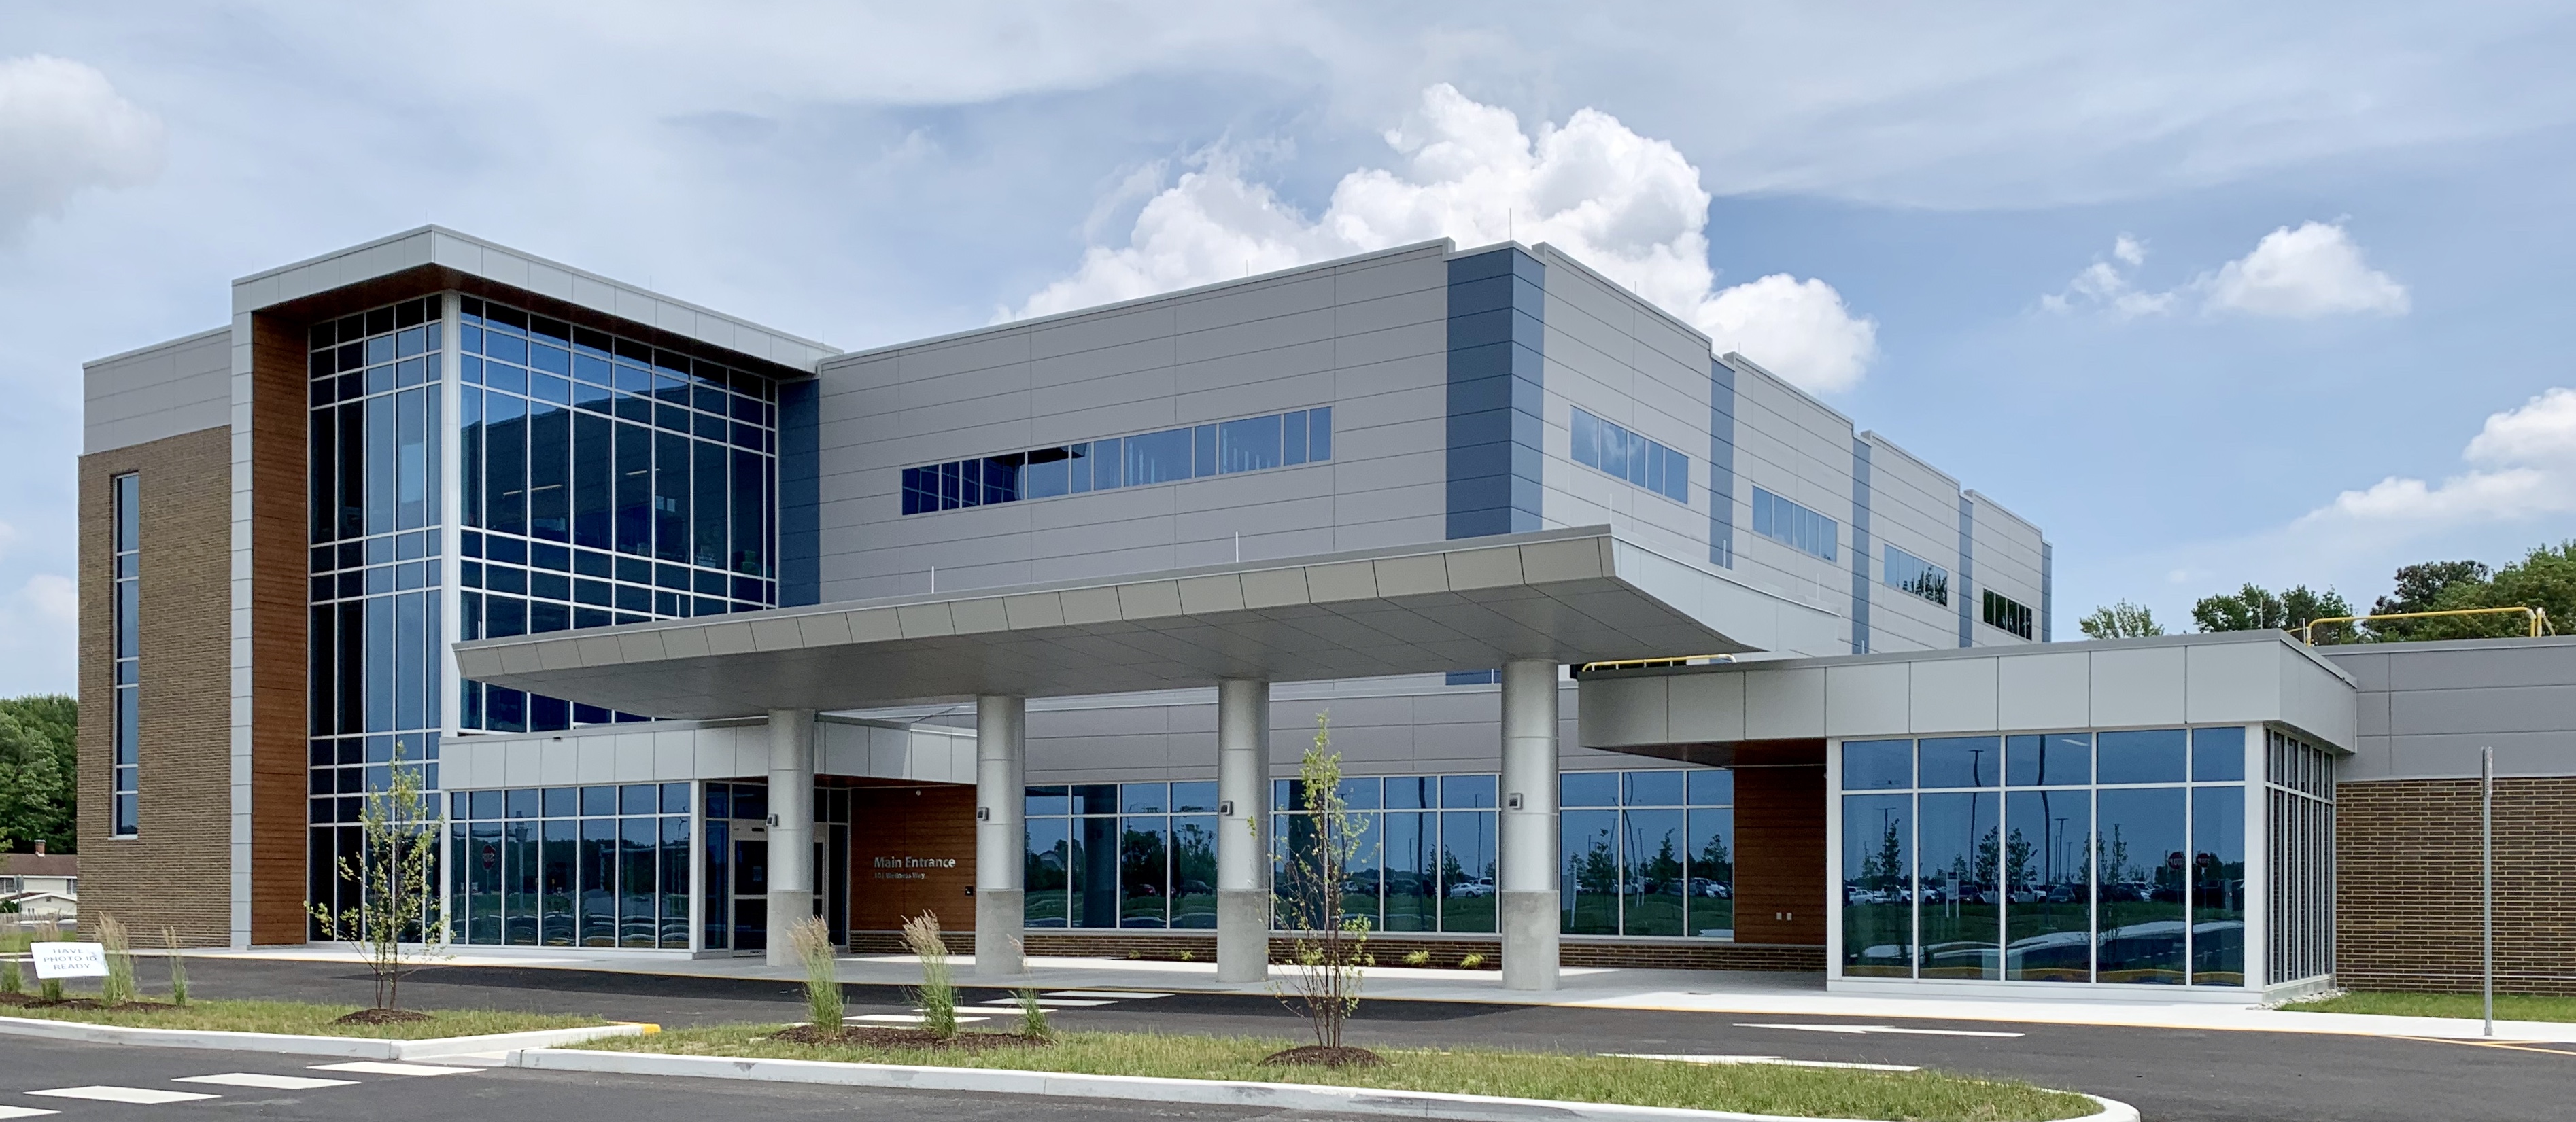 NEMOURS SUSSEX MEDICAL OFFICE BUILDING, Milford, DE